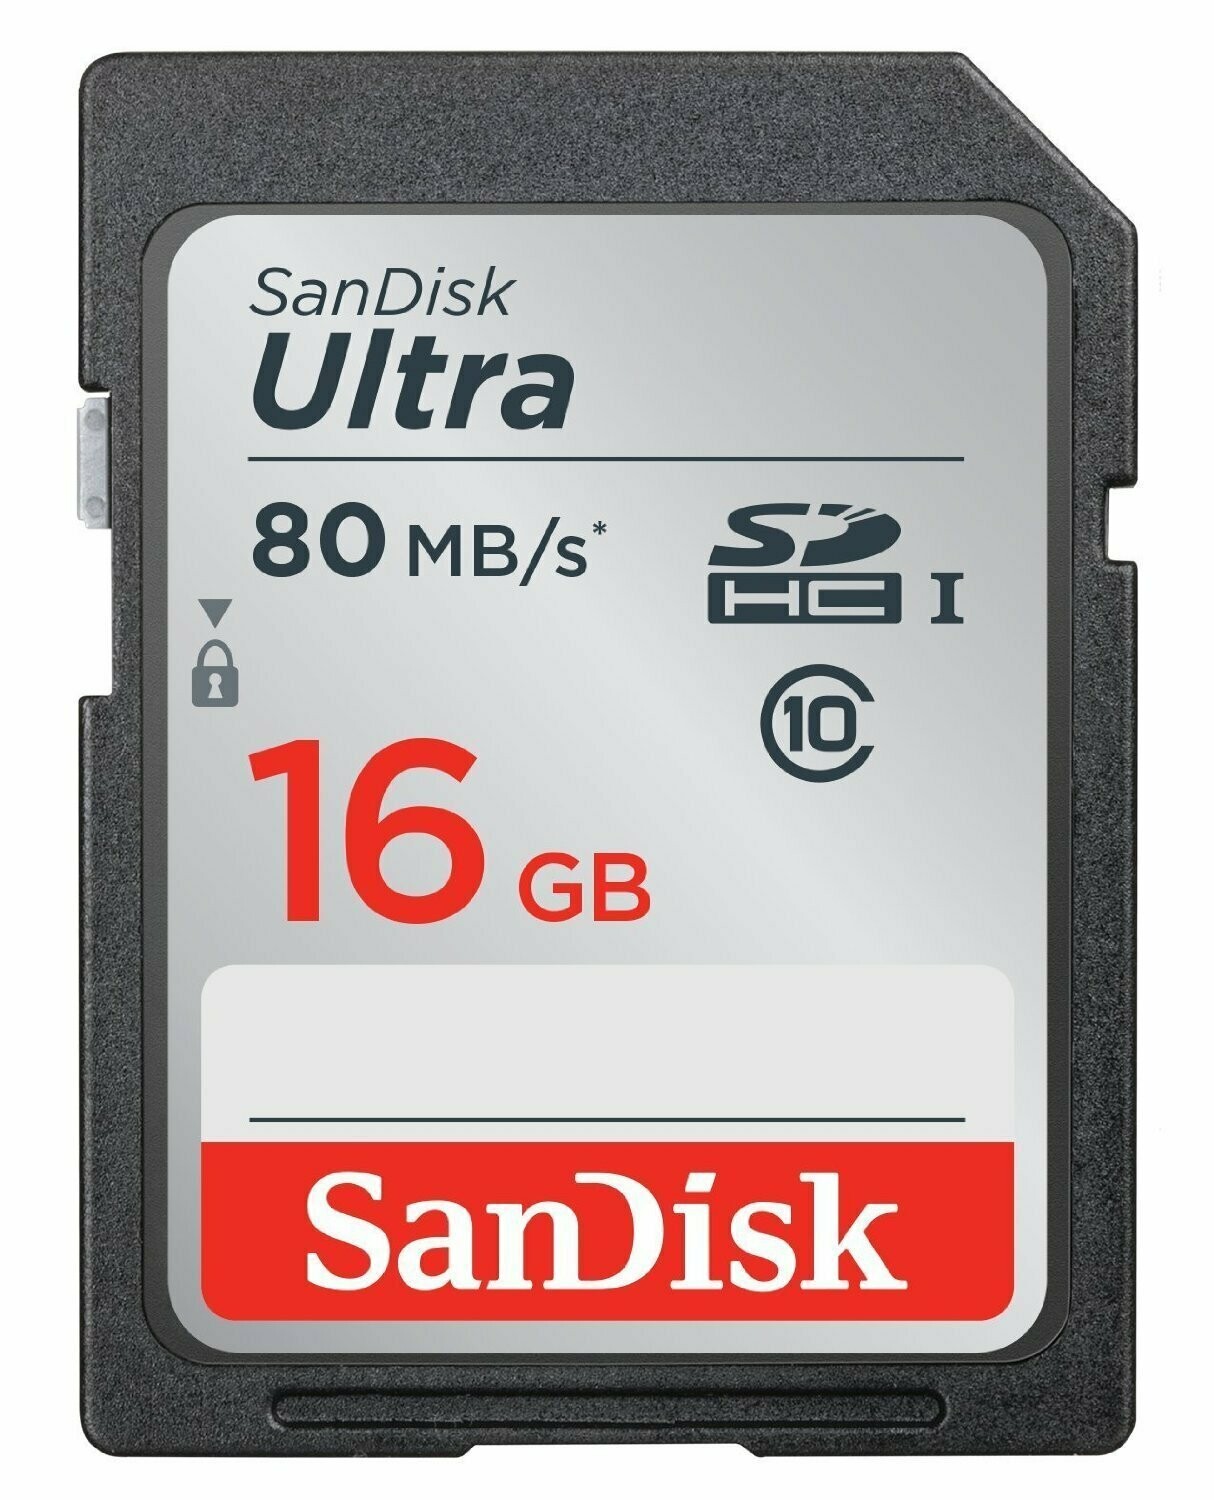 SanDisk 16GB Ultra SDHC Memory Card 80MB